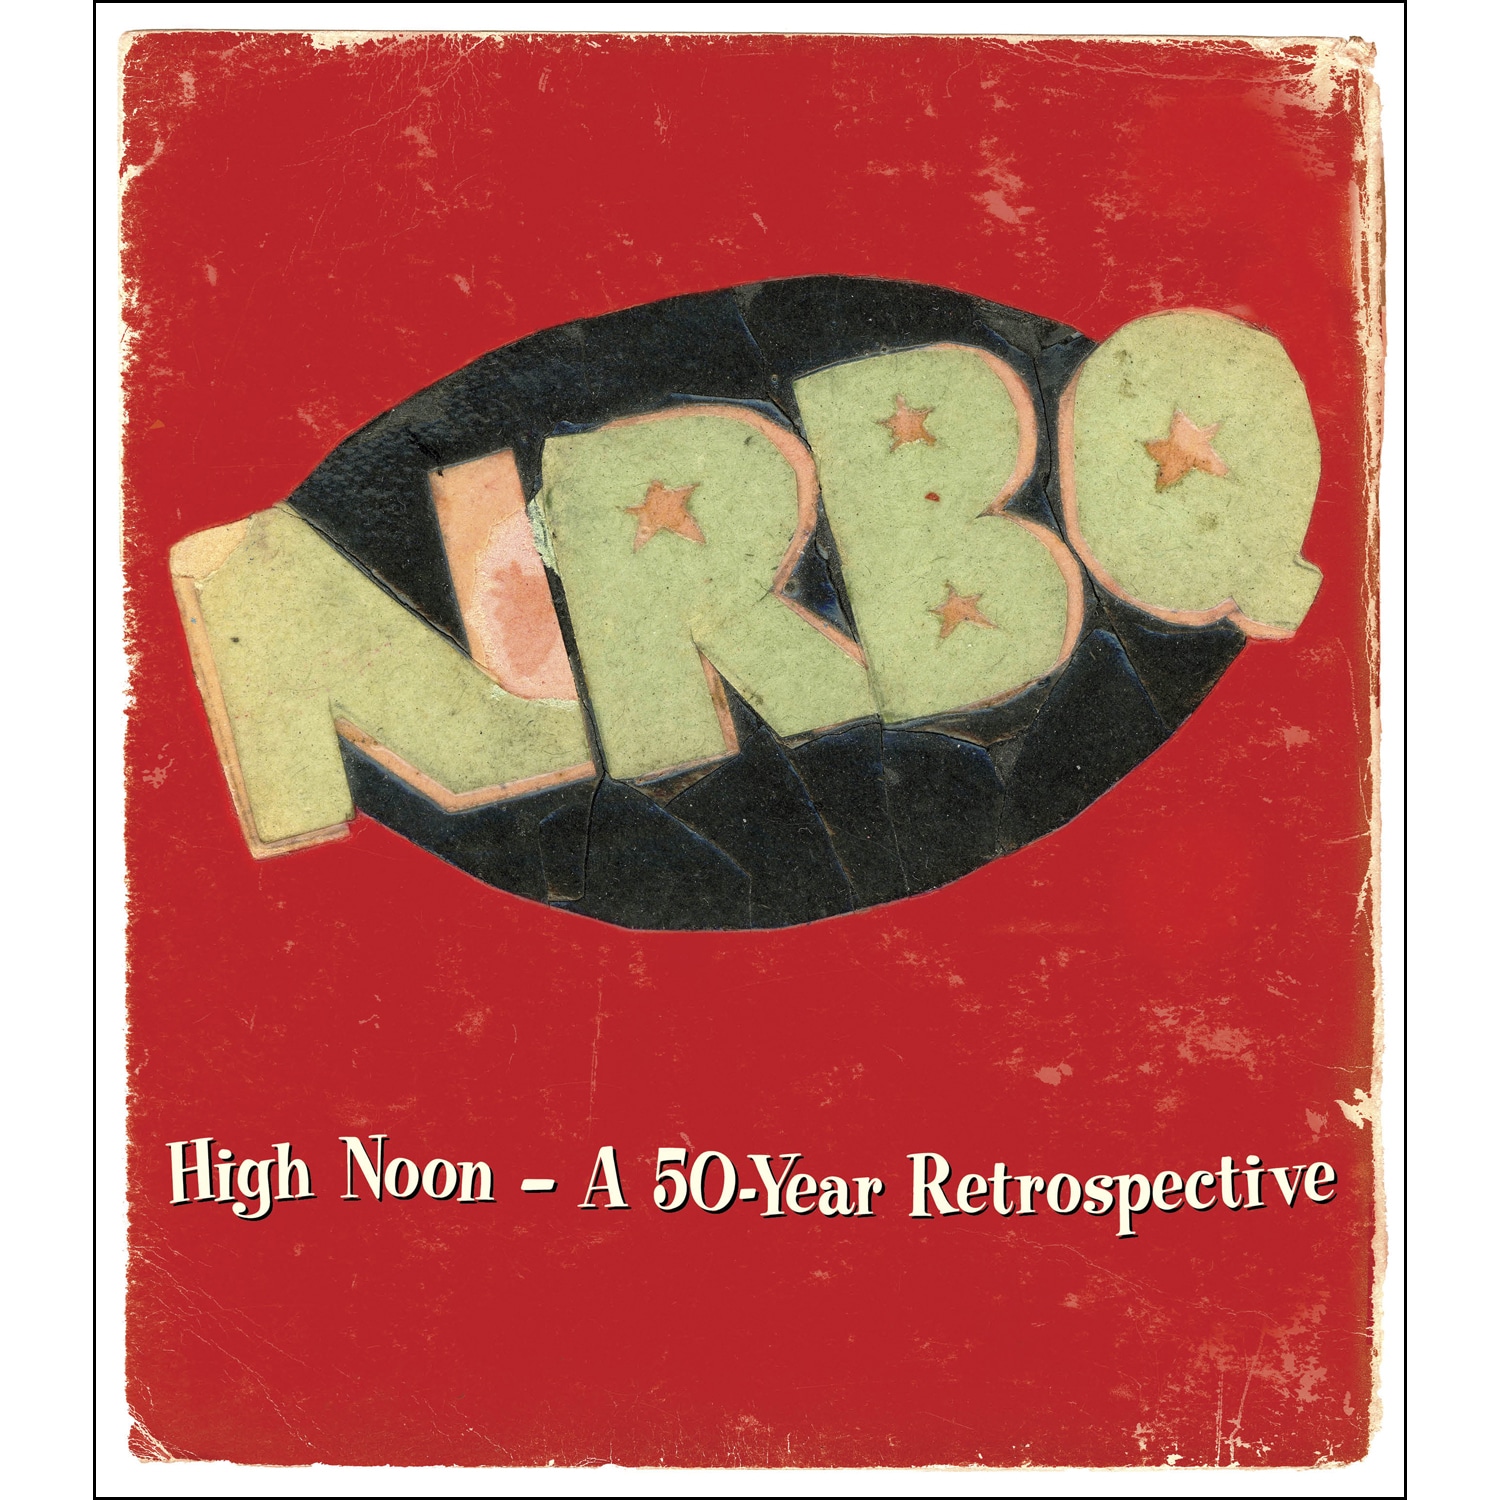 NRBQ: High Noon – A 50-Year Retrospective